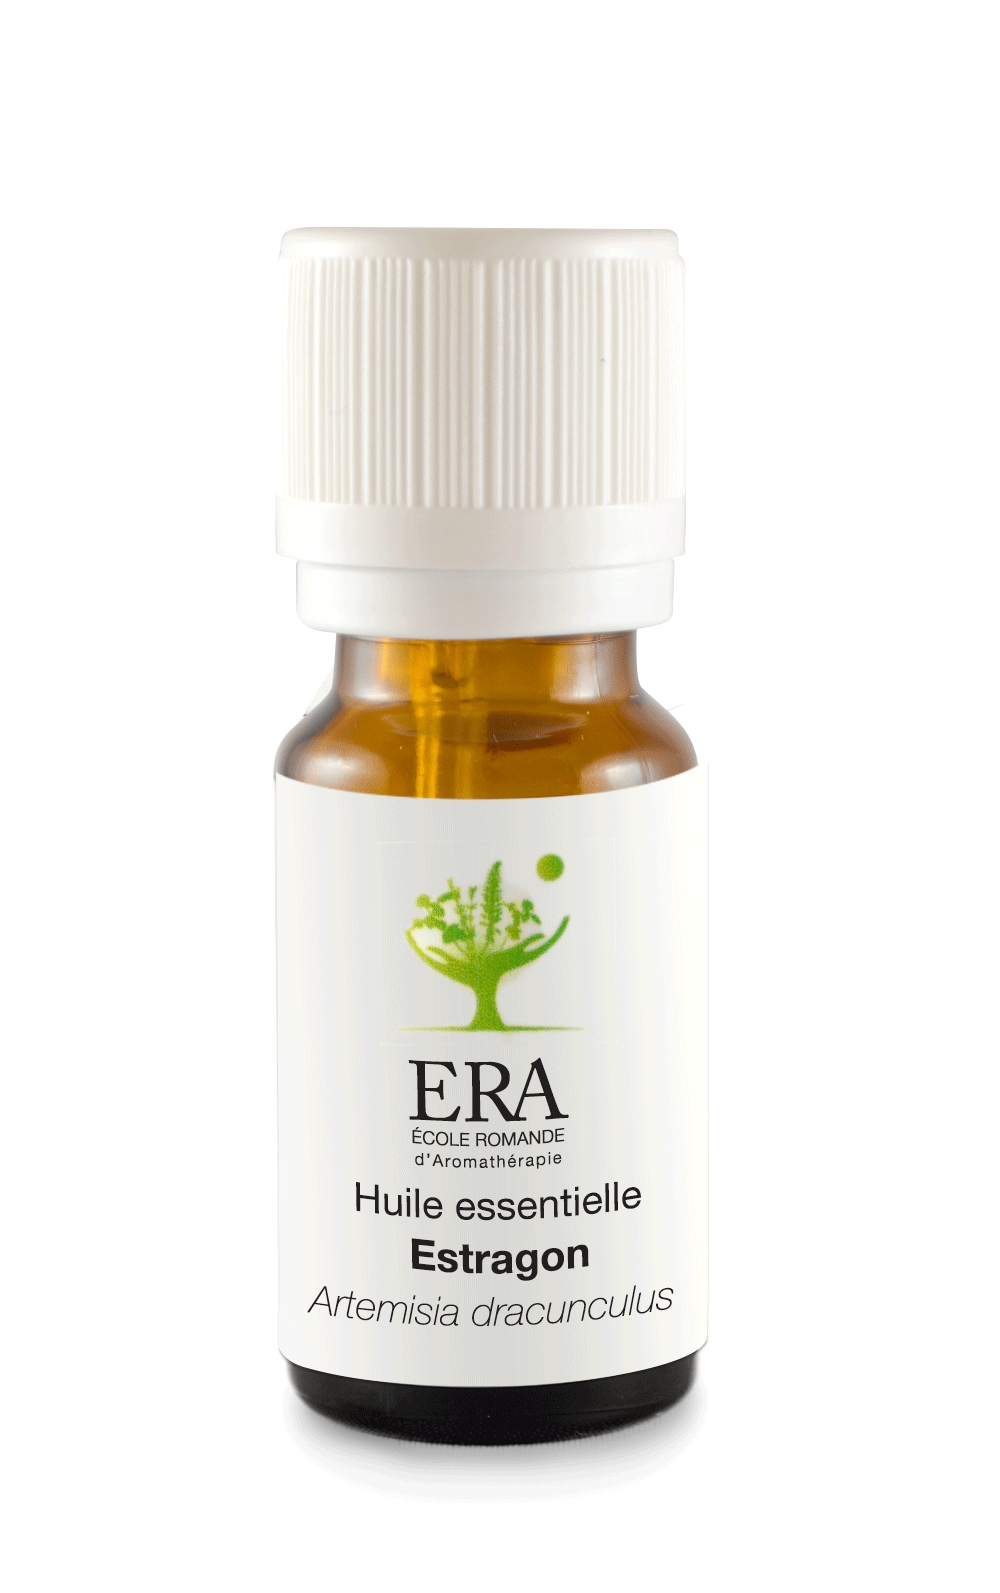 Estragon - Artemisia dracunculus - Astéracées